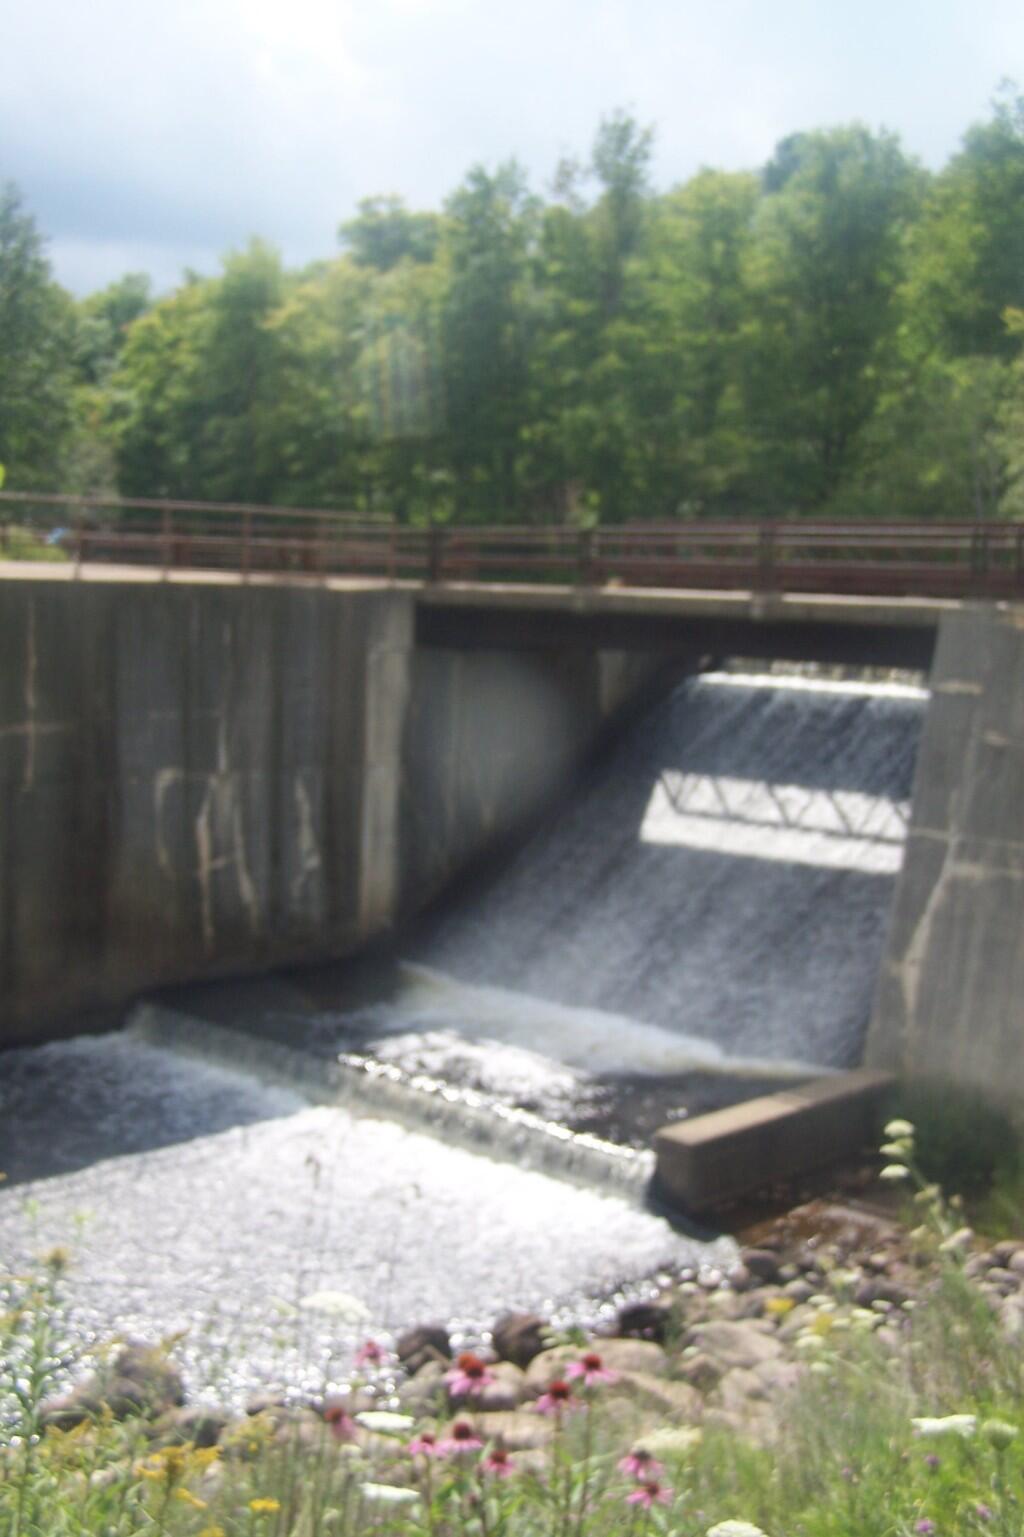 Lows Upper Dam Spillway